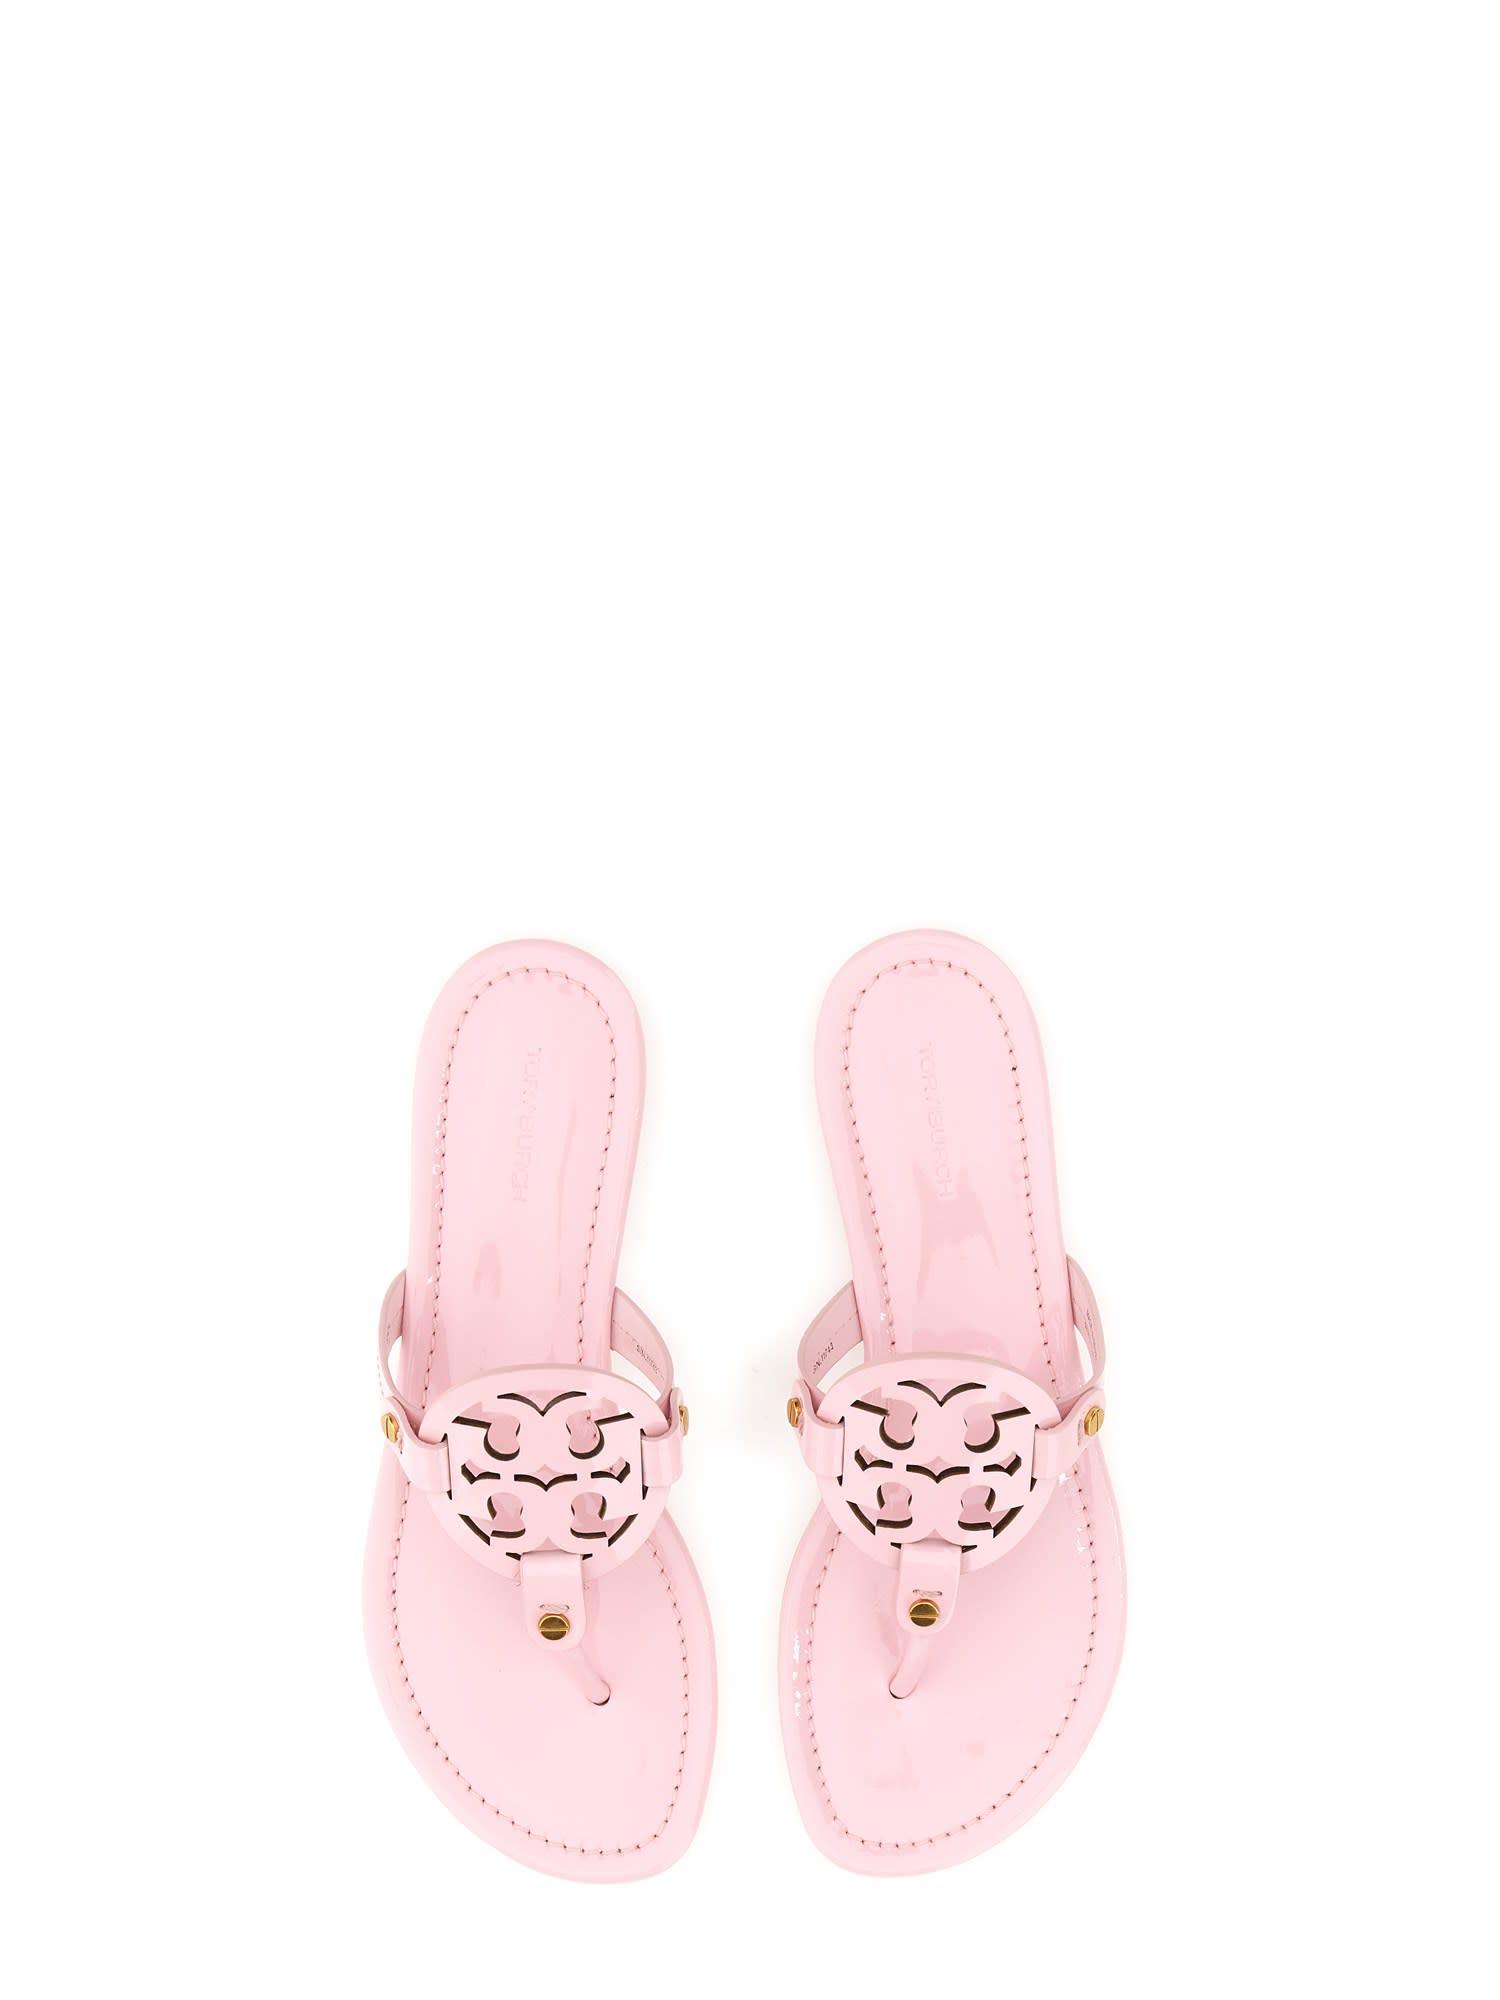 Tory Burch, Shoes, Tory Burch Petunia Pink Miller Sandals